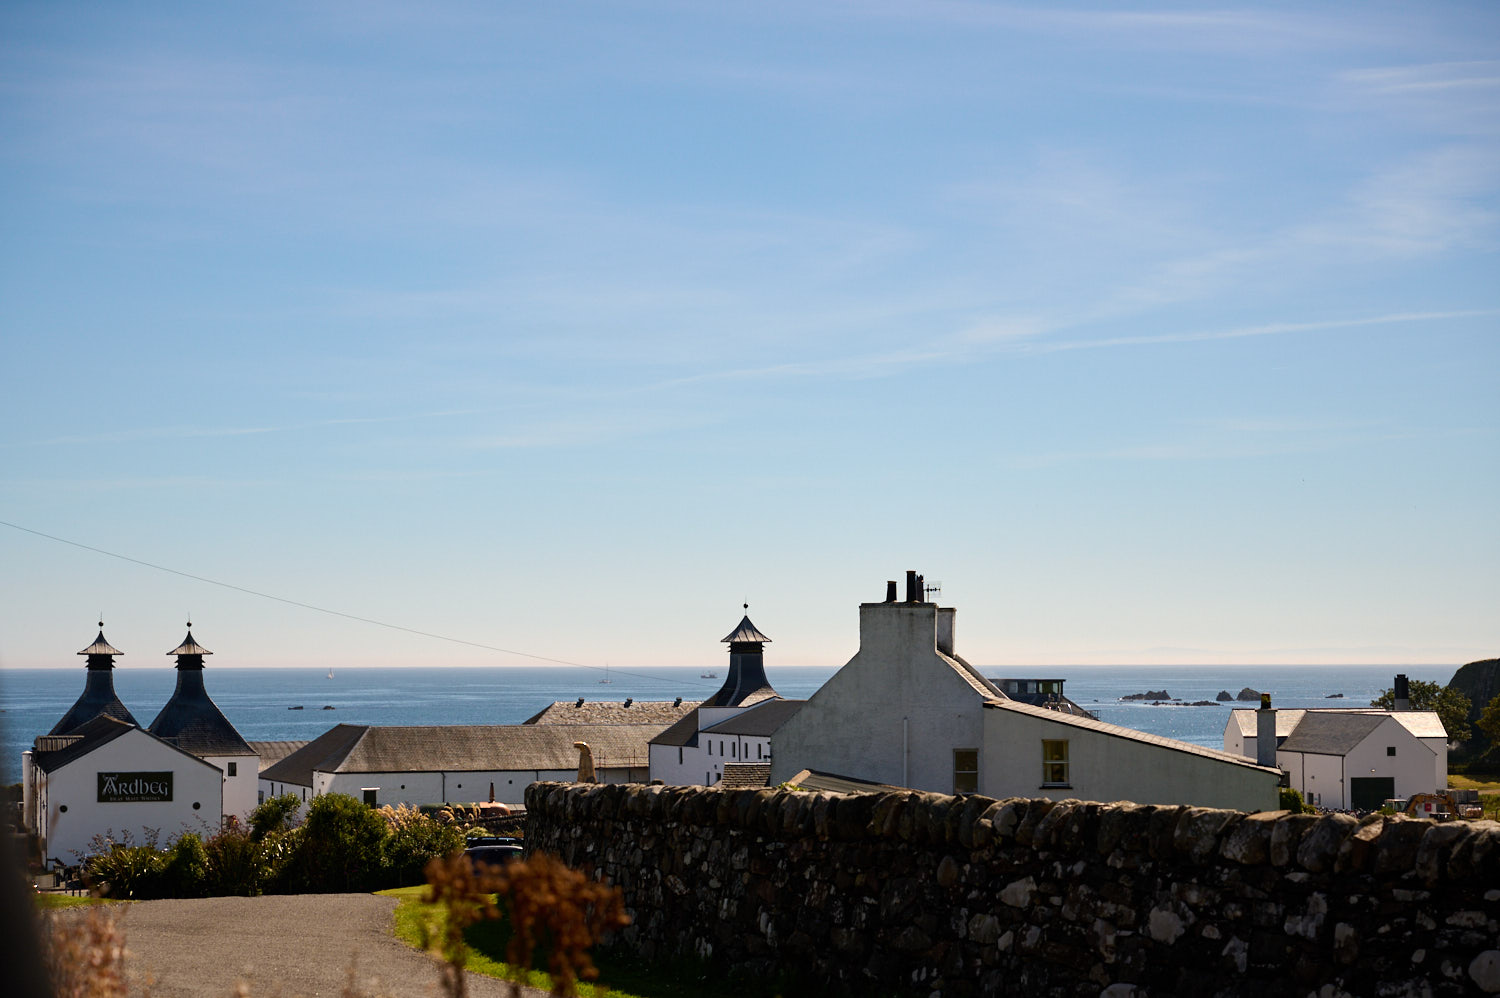 View in the isle of Islay, near Ardberg distillery.